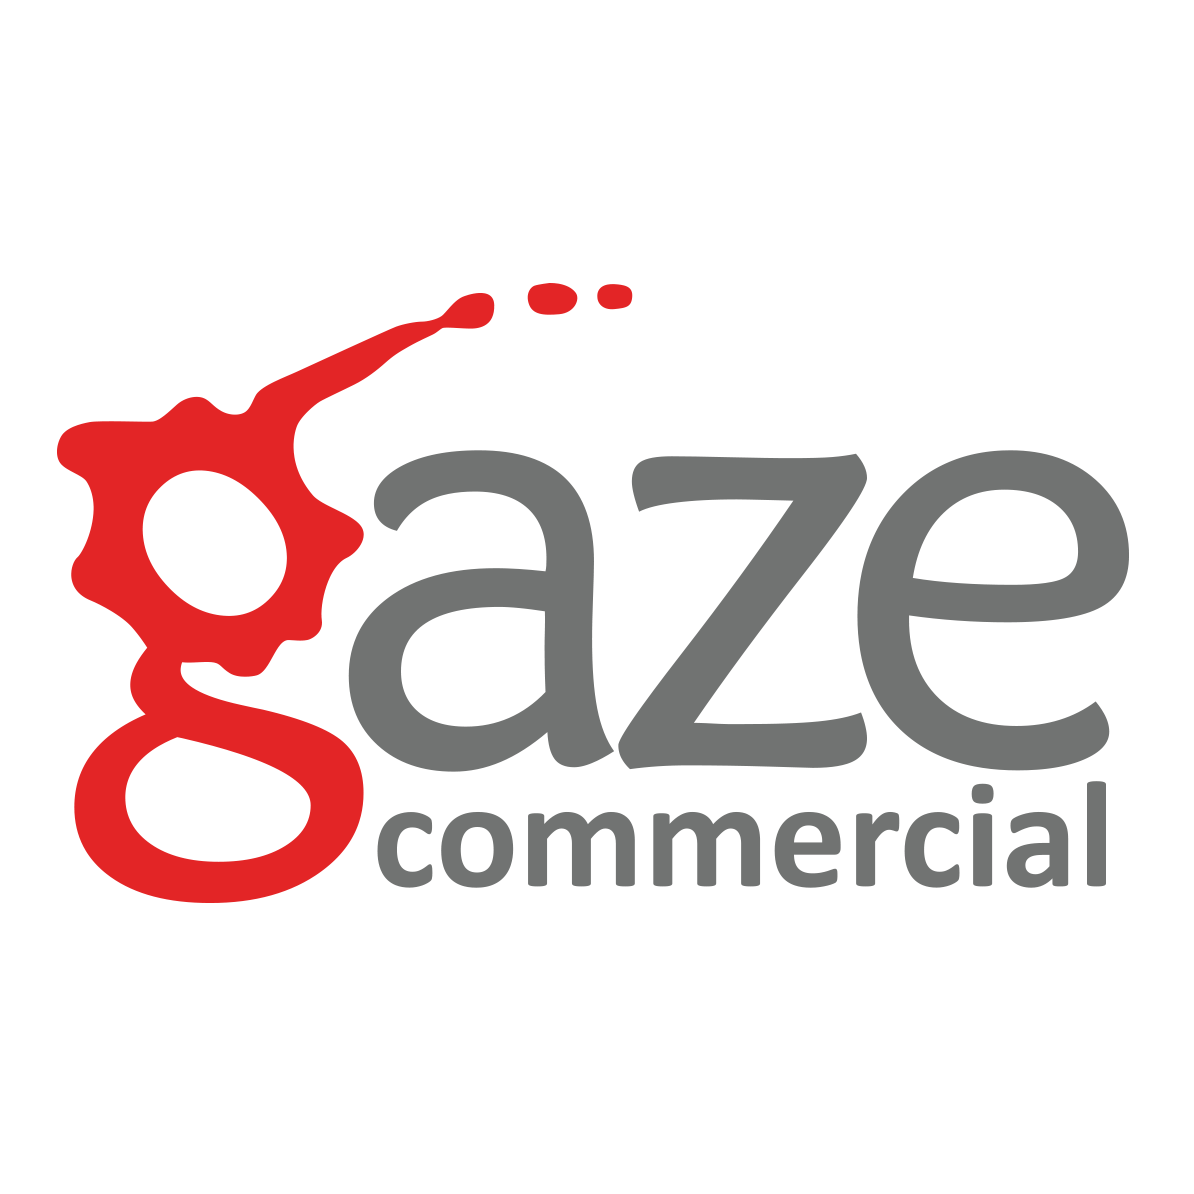 Gaze Commercial